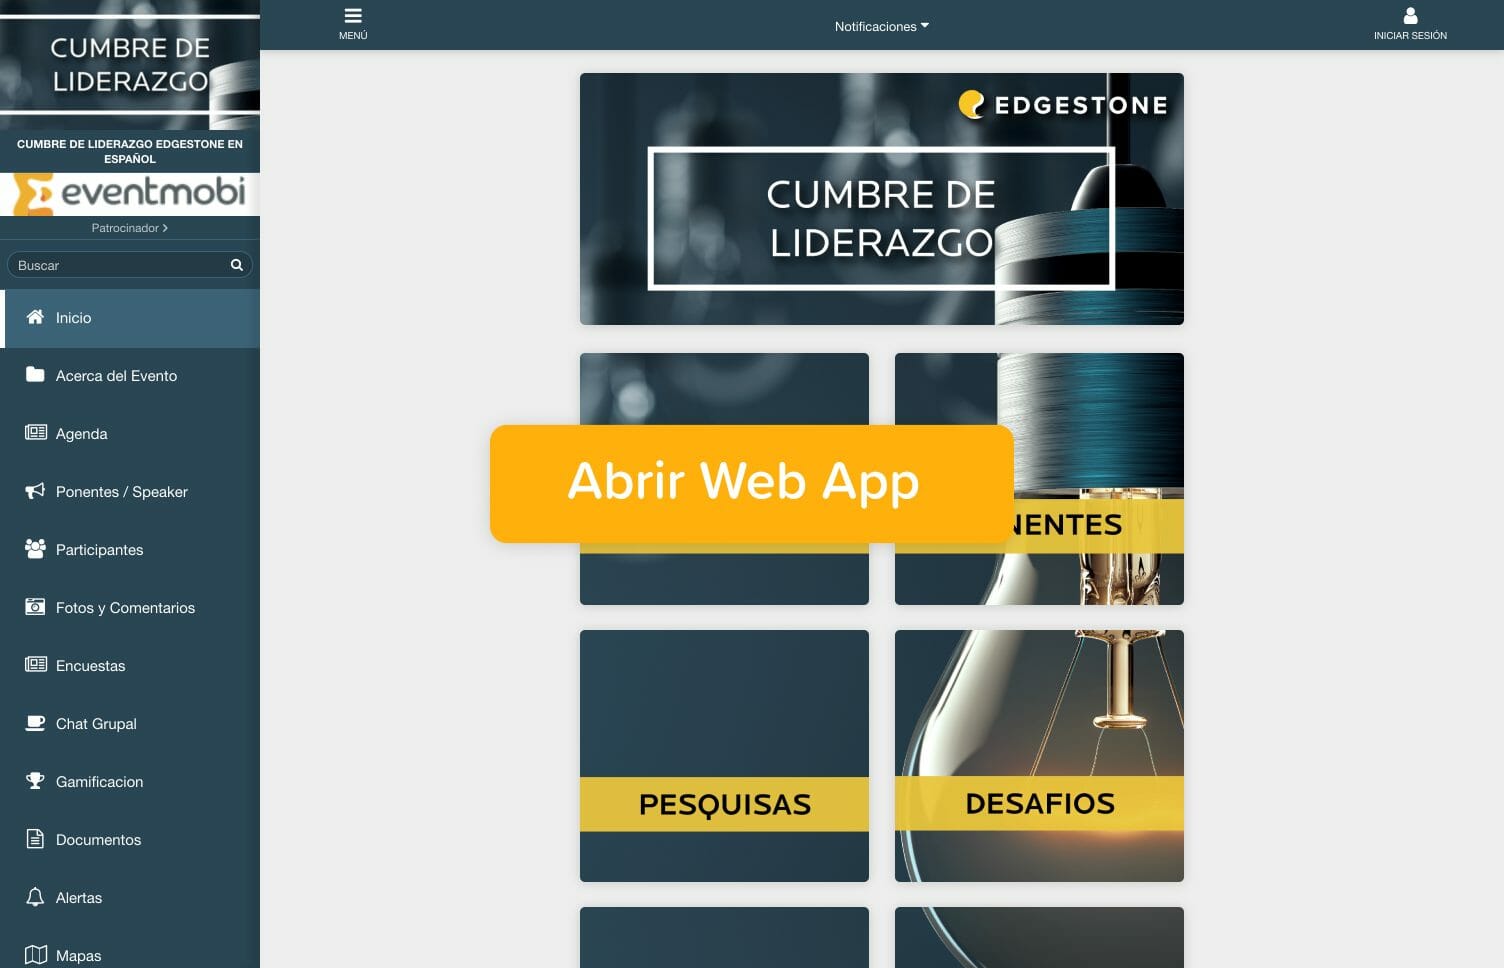 Abrir Web App